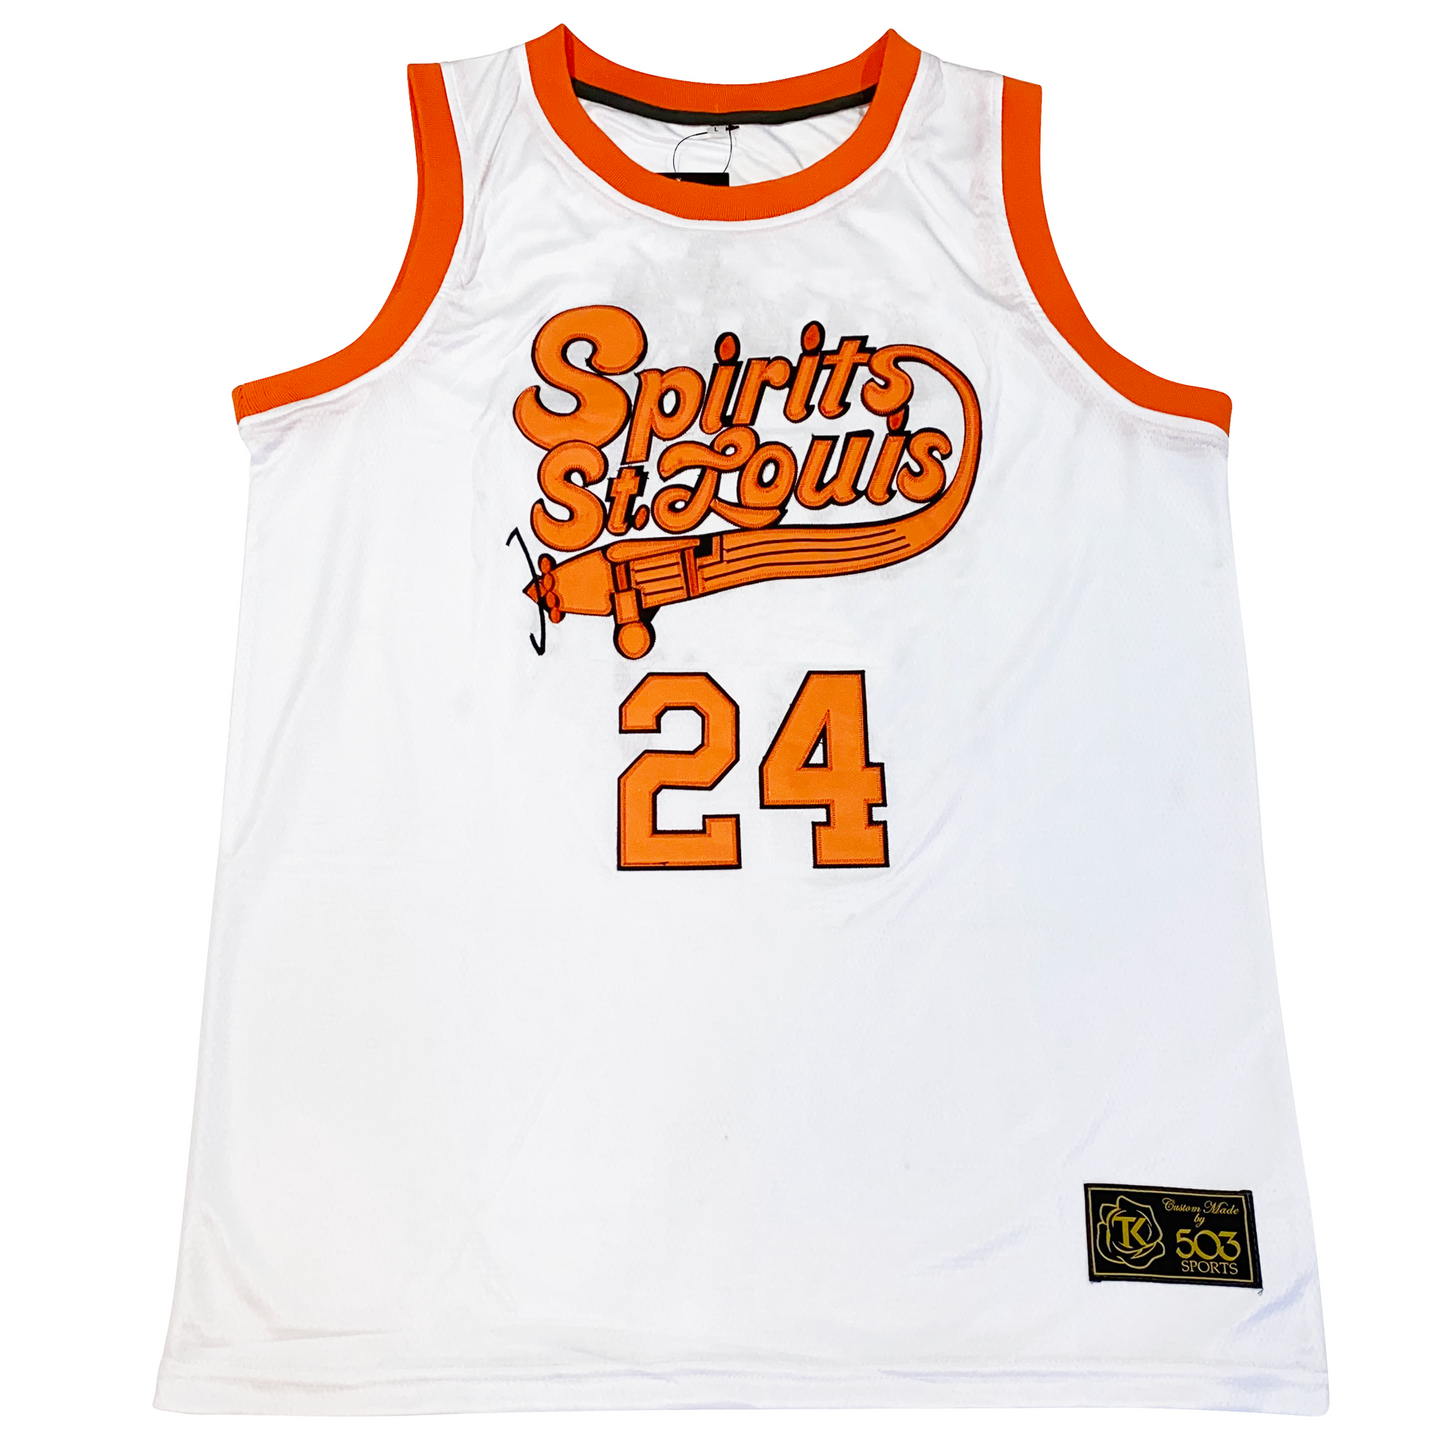 Mtr St. Louis Spirits Basketball Men/Unisex T-Shirt, White / L